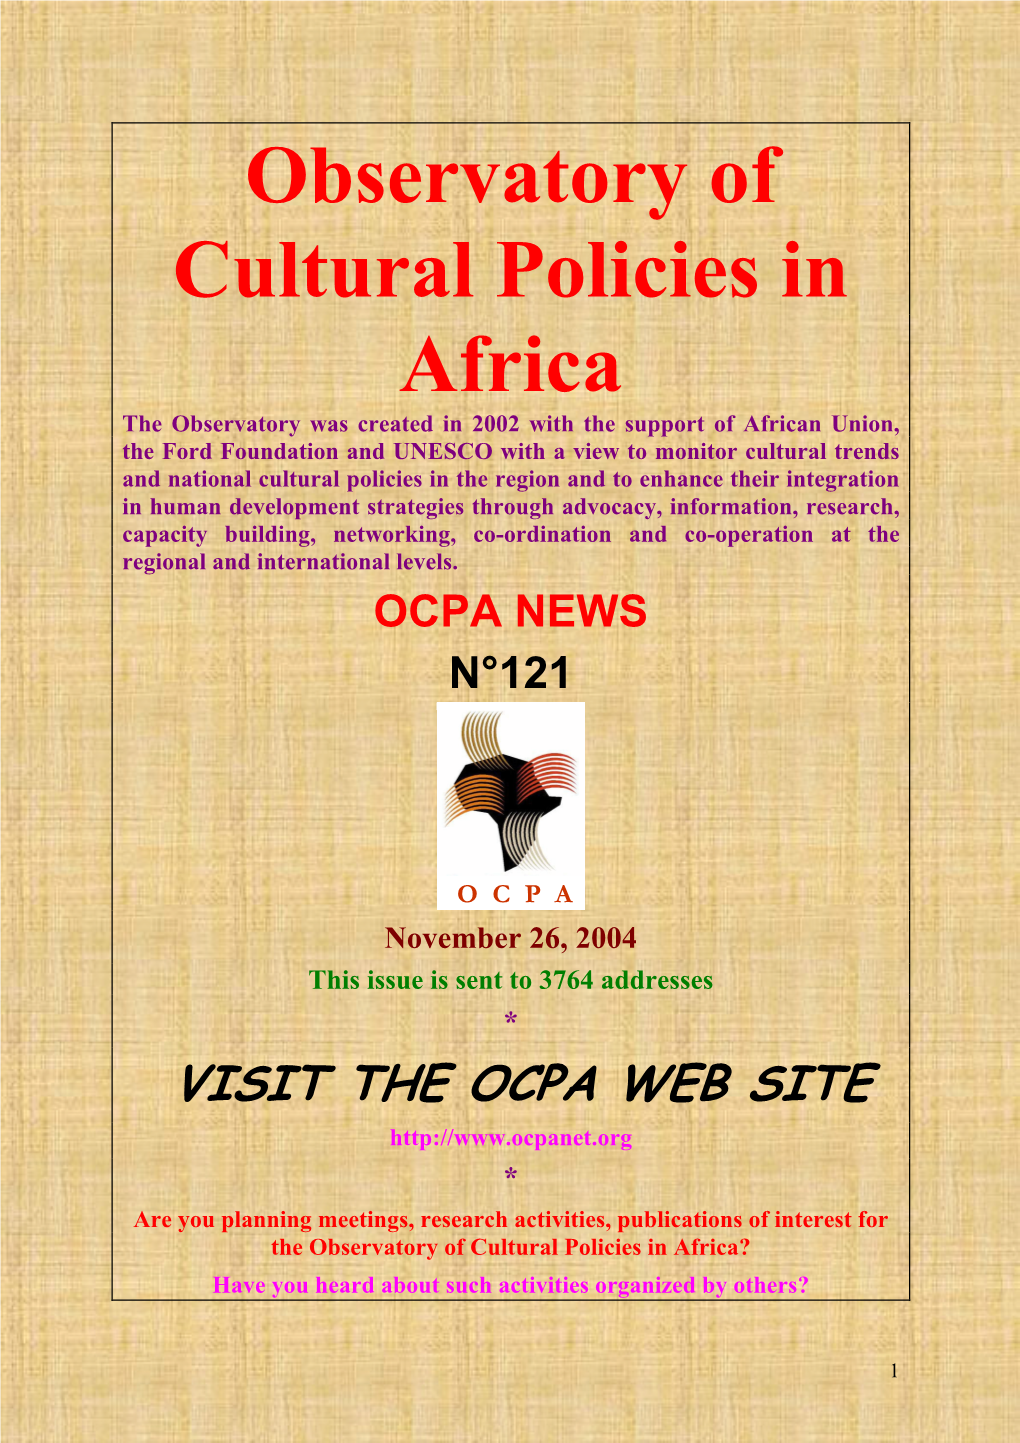 Ocpa News No. 121, 26 November 2004